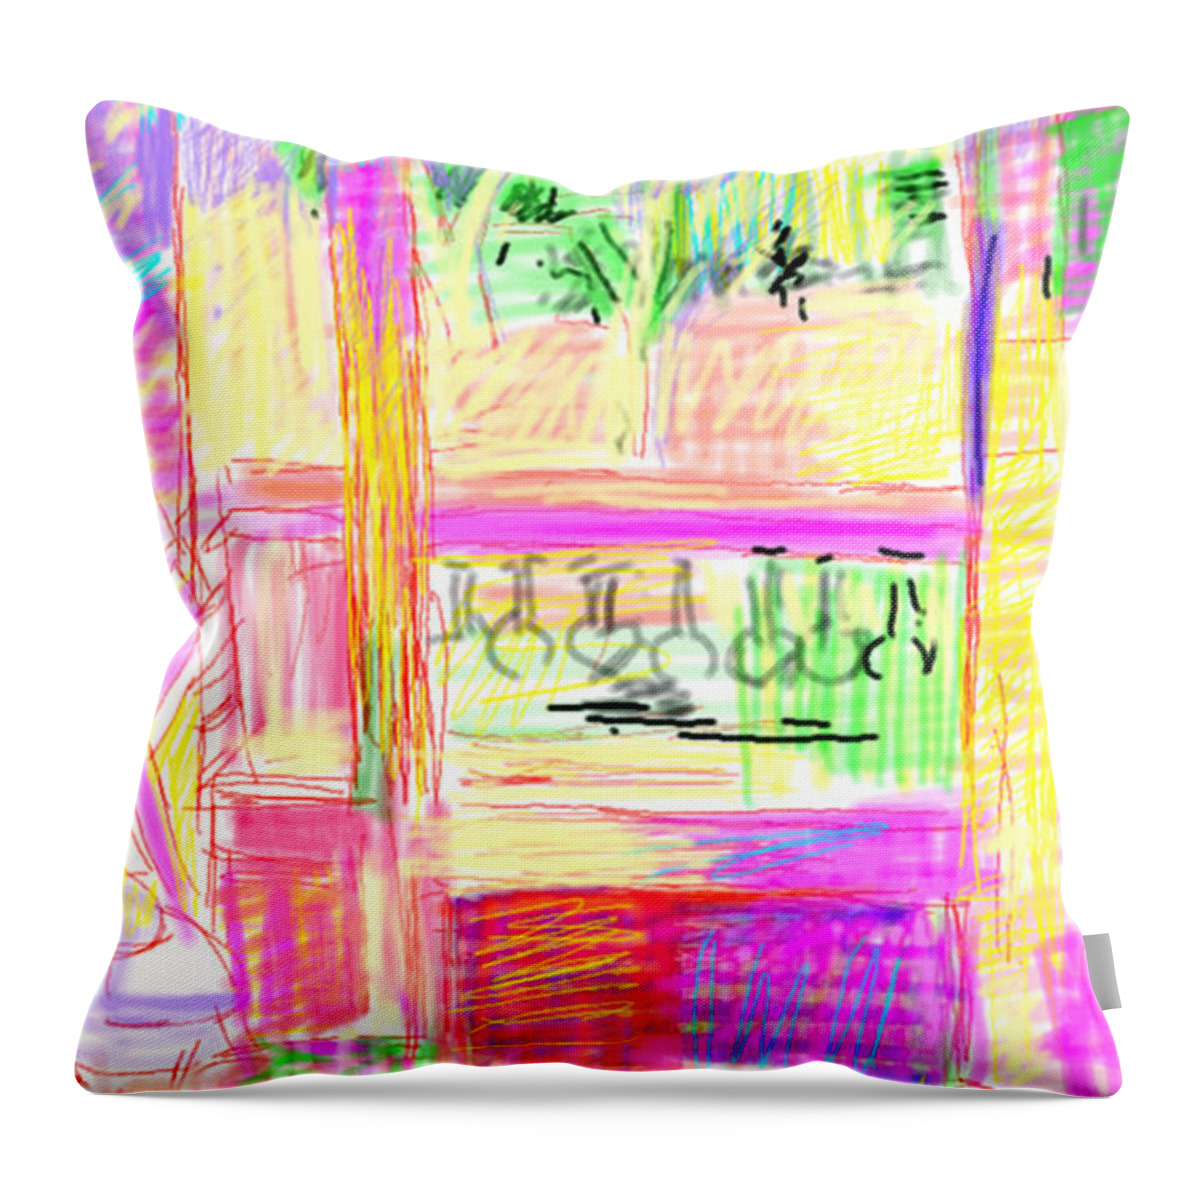 Table Throw Pillow featuring the digital art Sunlight Through The Window by Joe Roache